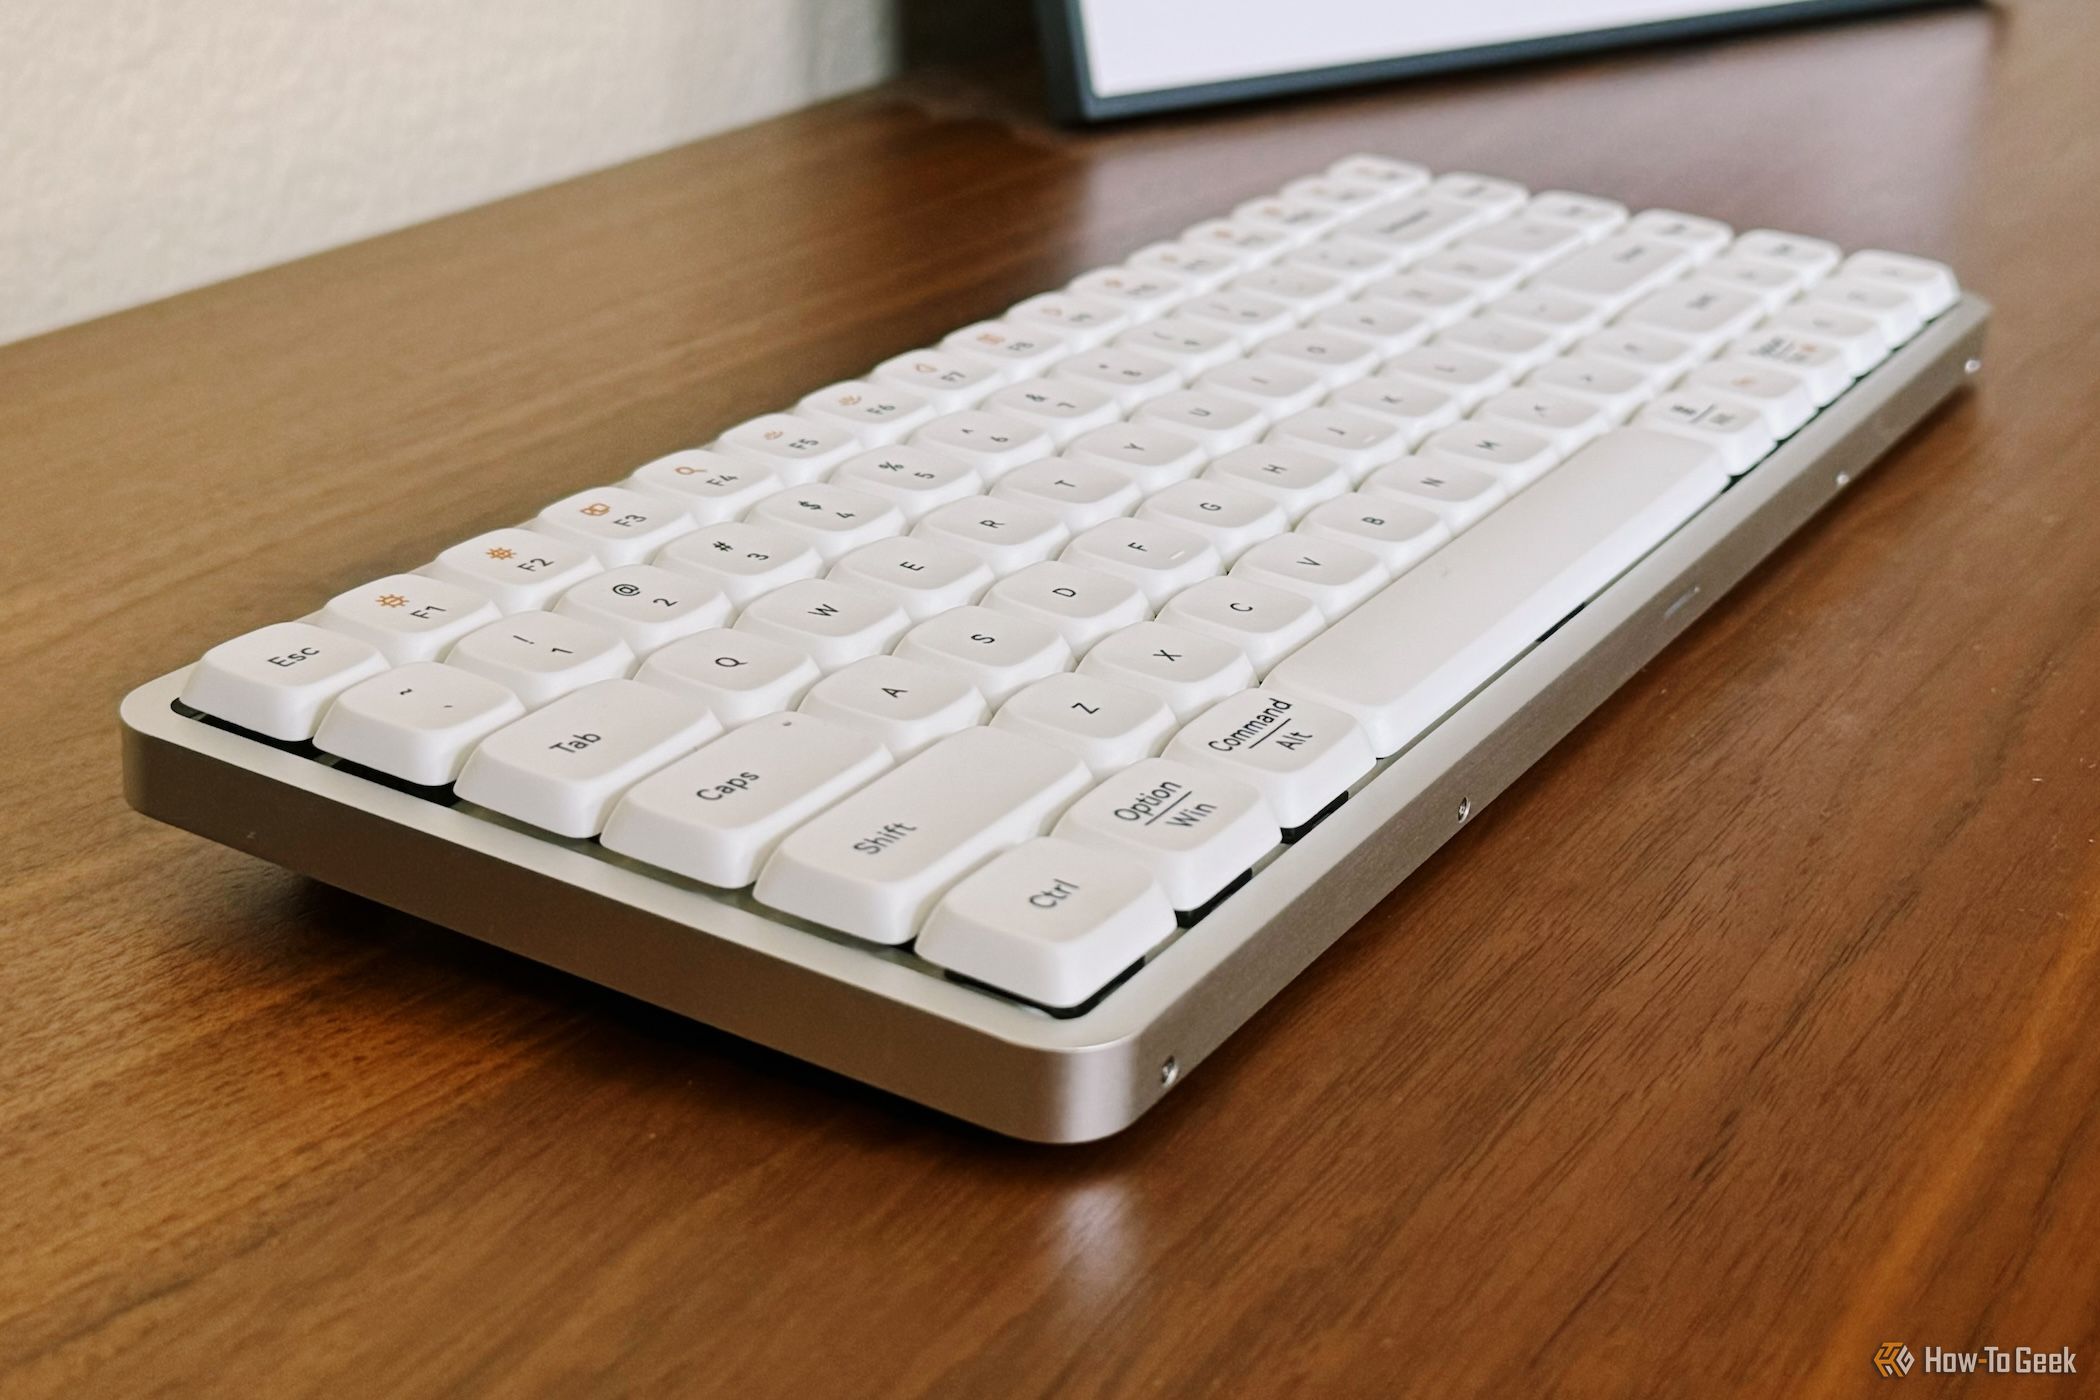 Lofree Flow keyboard sitting on a table